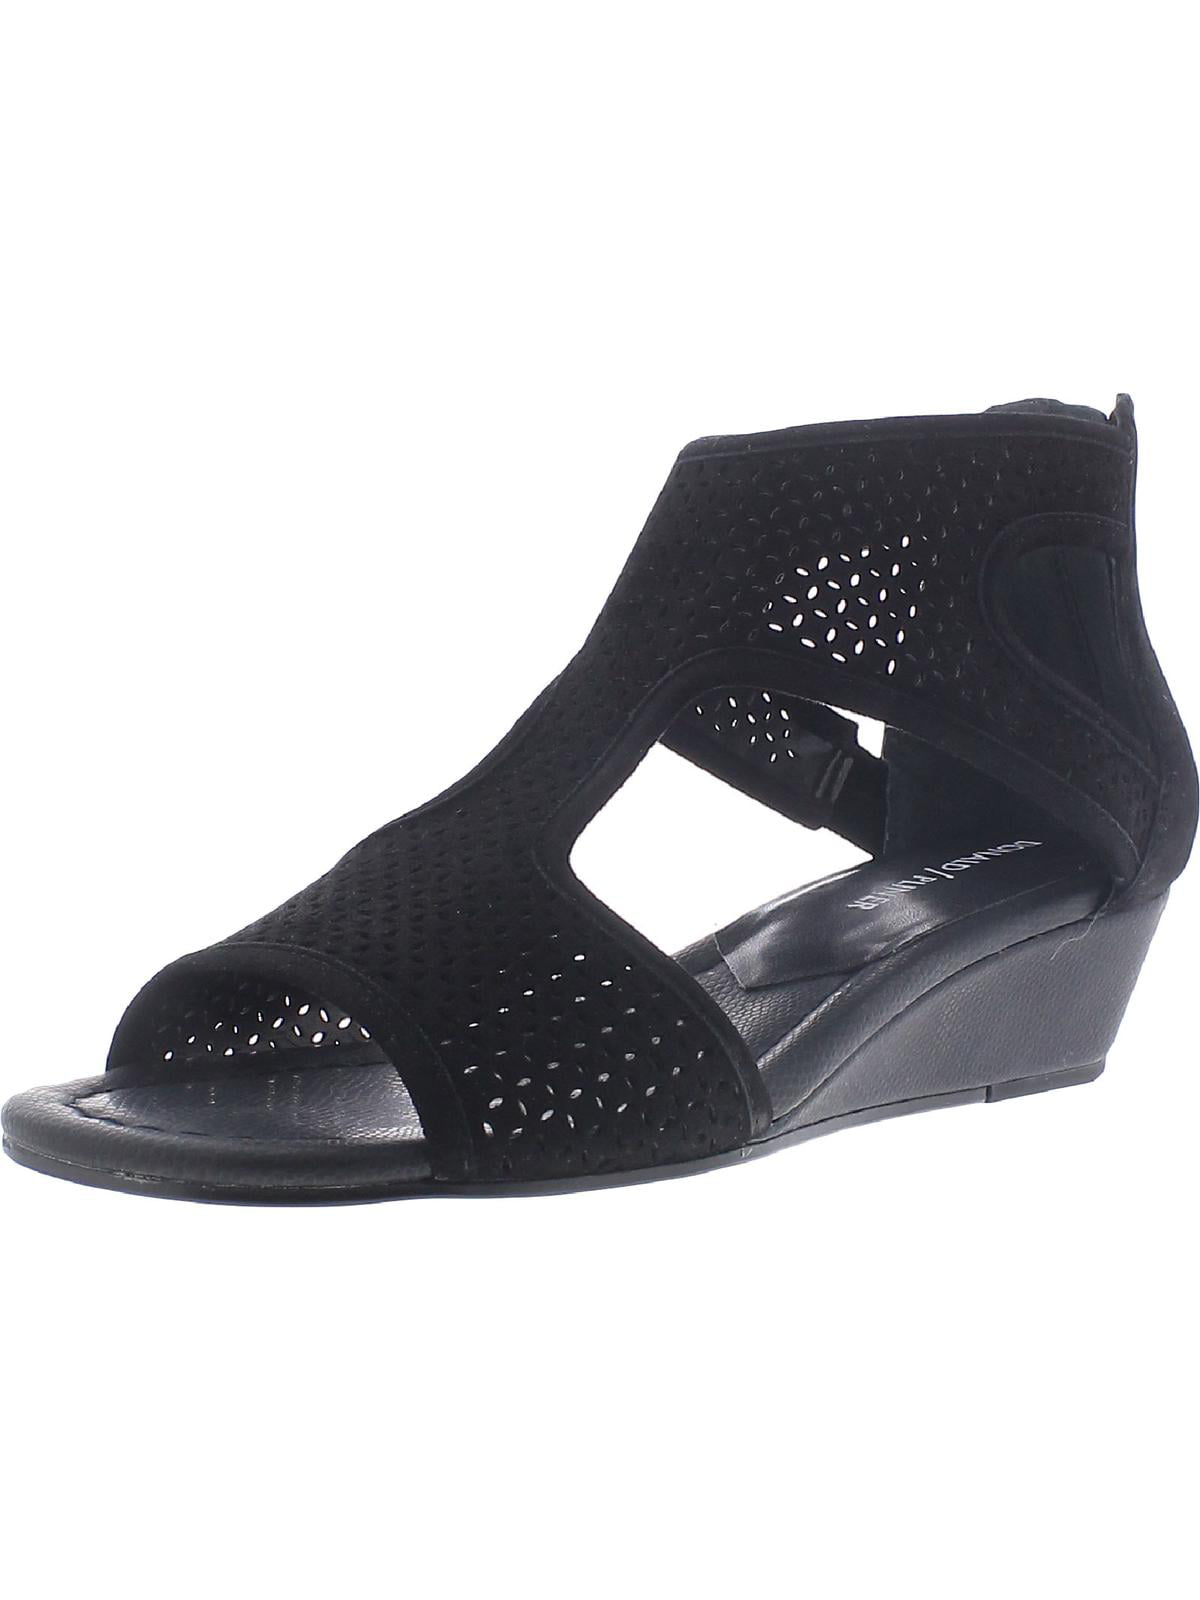 Pliner Womens Lelle Beige Wedges Sandals 6.5 Medium BHFO 2554 B,M Donald J